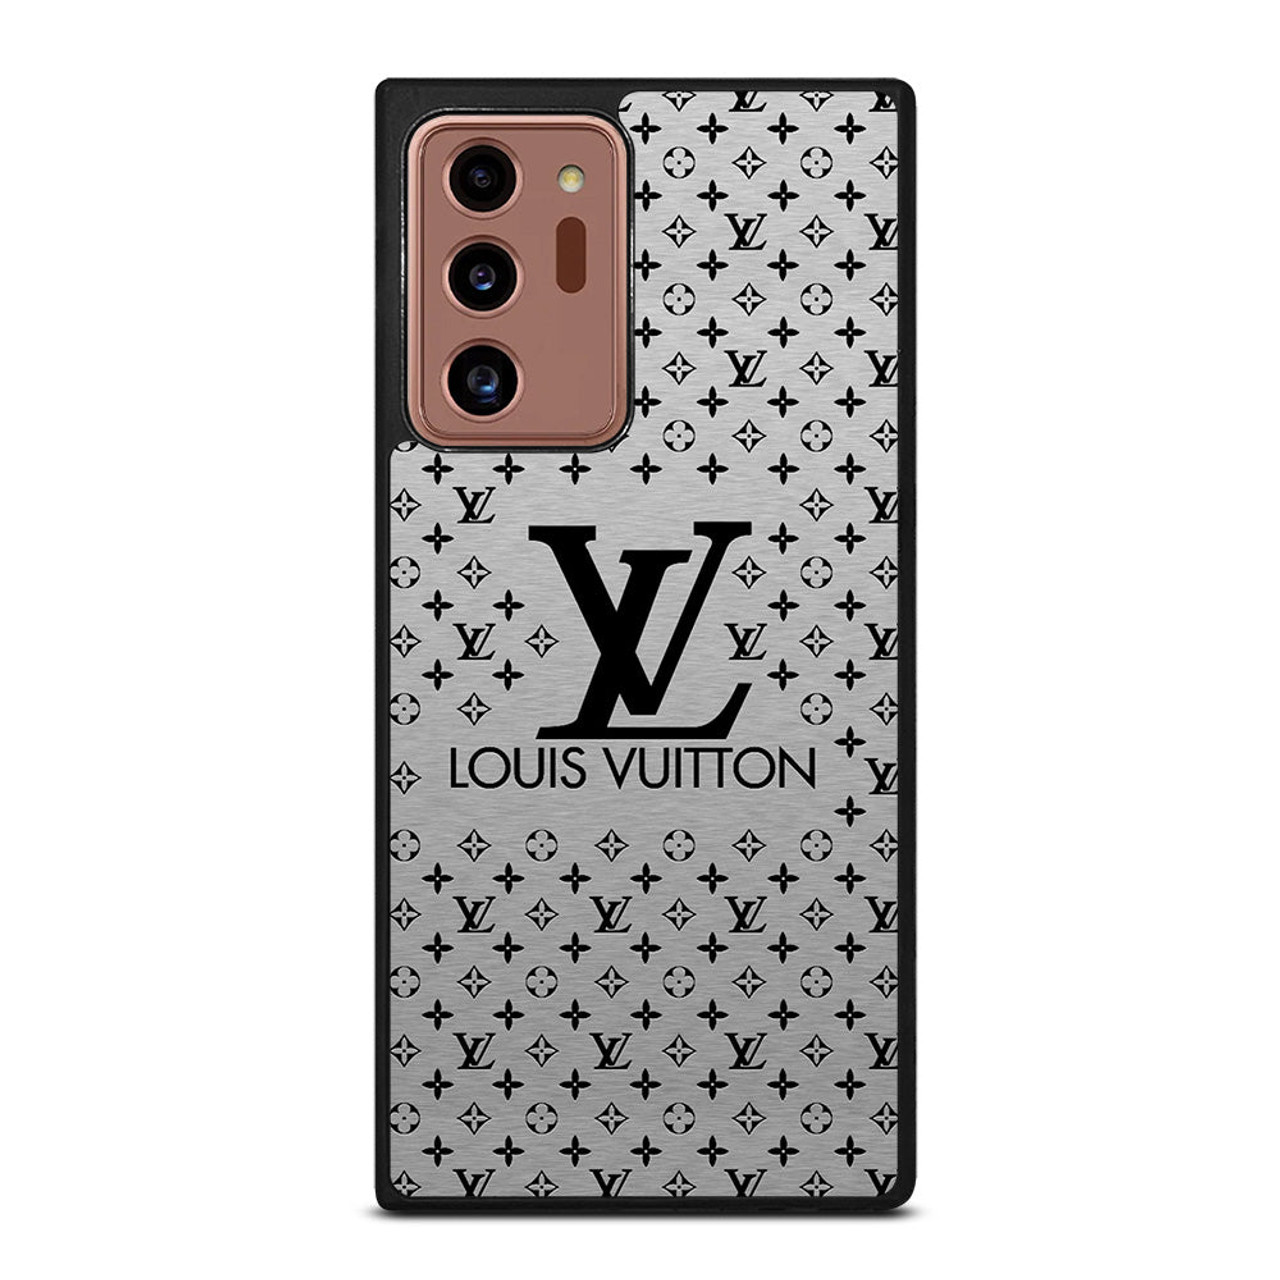 LOUIS VUITTON LV LOGO UNIQUE PATTERN Samsung Galaxy Note 10 Case Cover